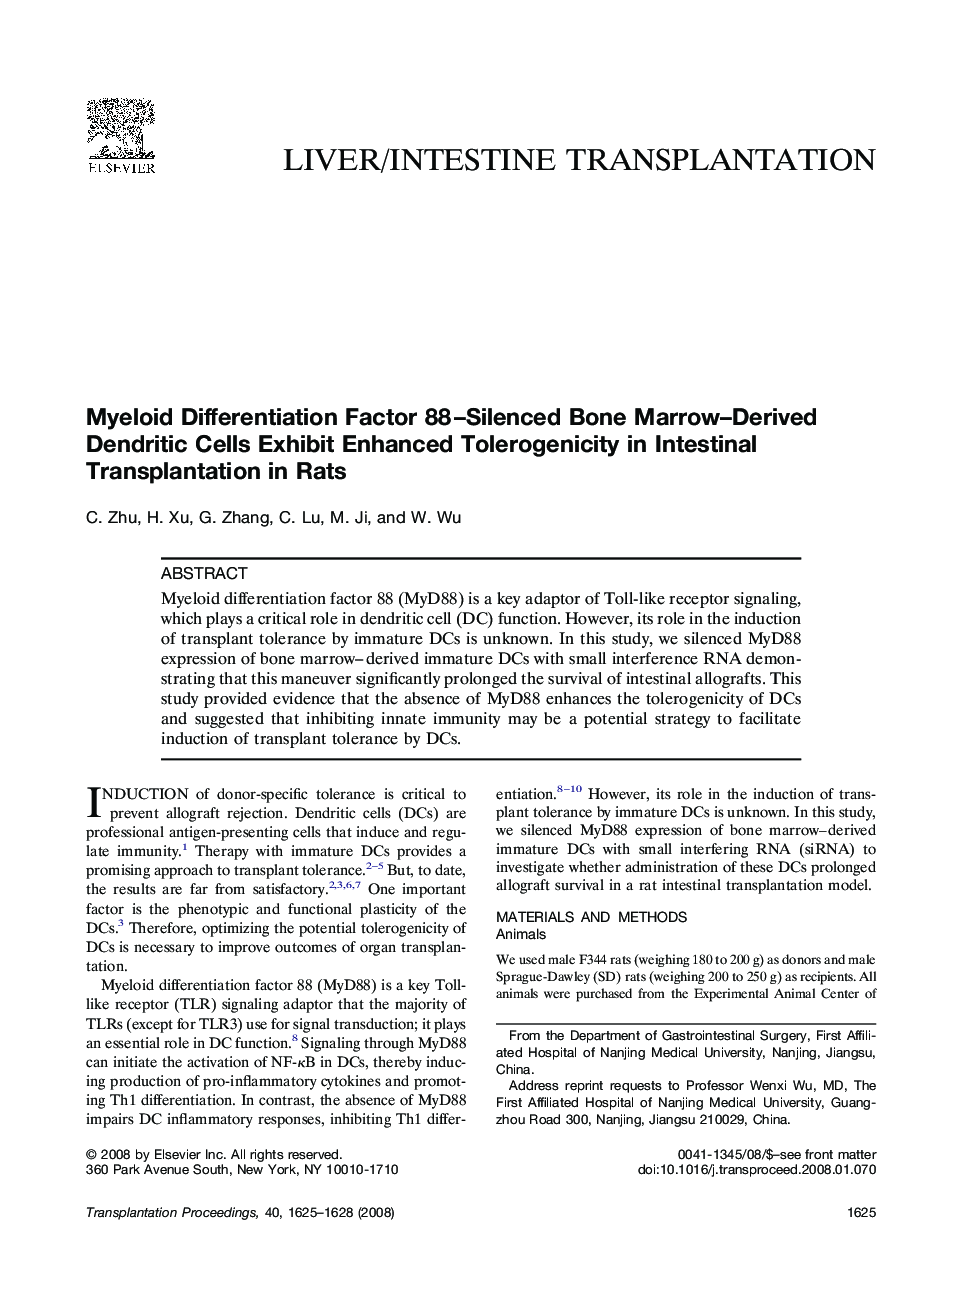 Myeloid Differentiation Factor 88-Silenced Bone Marrow-Derived Dendritic Cells Exhibit Enhanced Tolerogenicity in Intestinal Transplantation in Rats